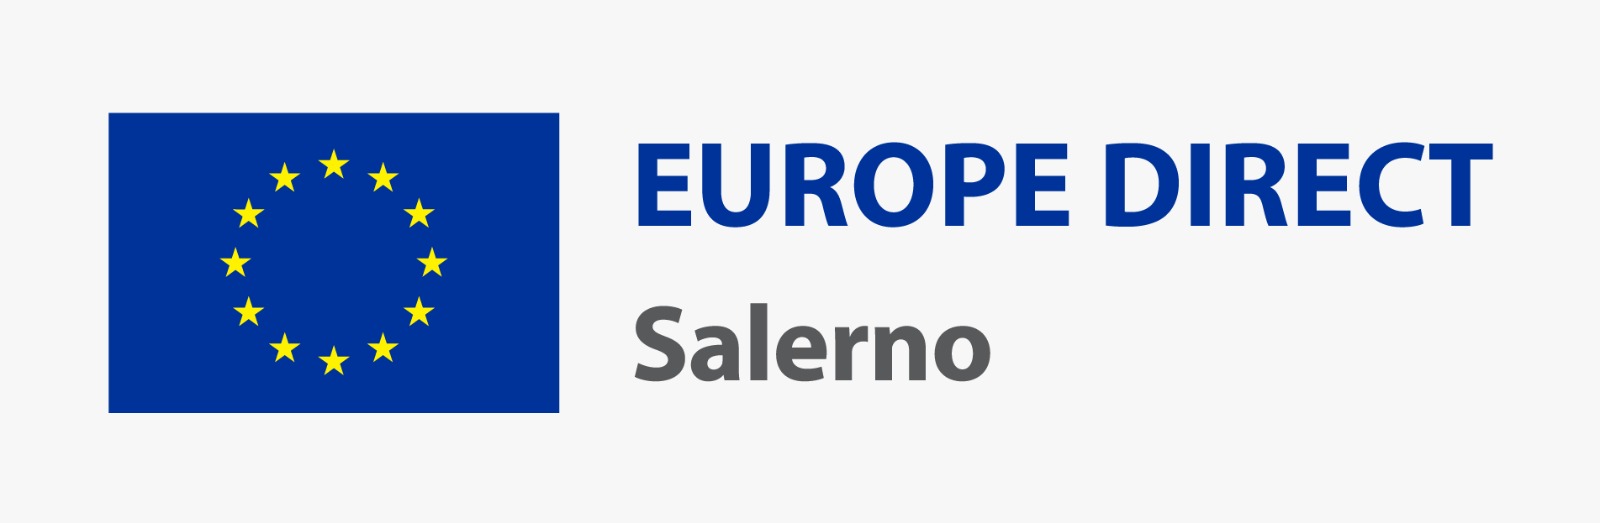 europe-direct-salerno